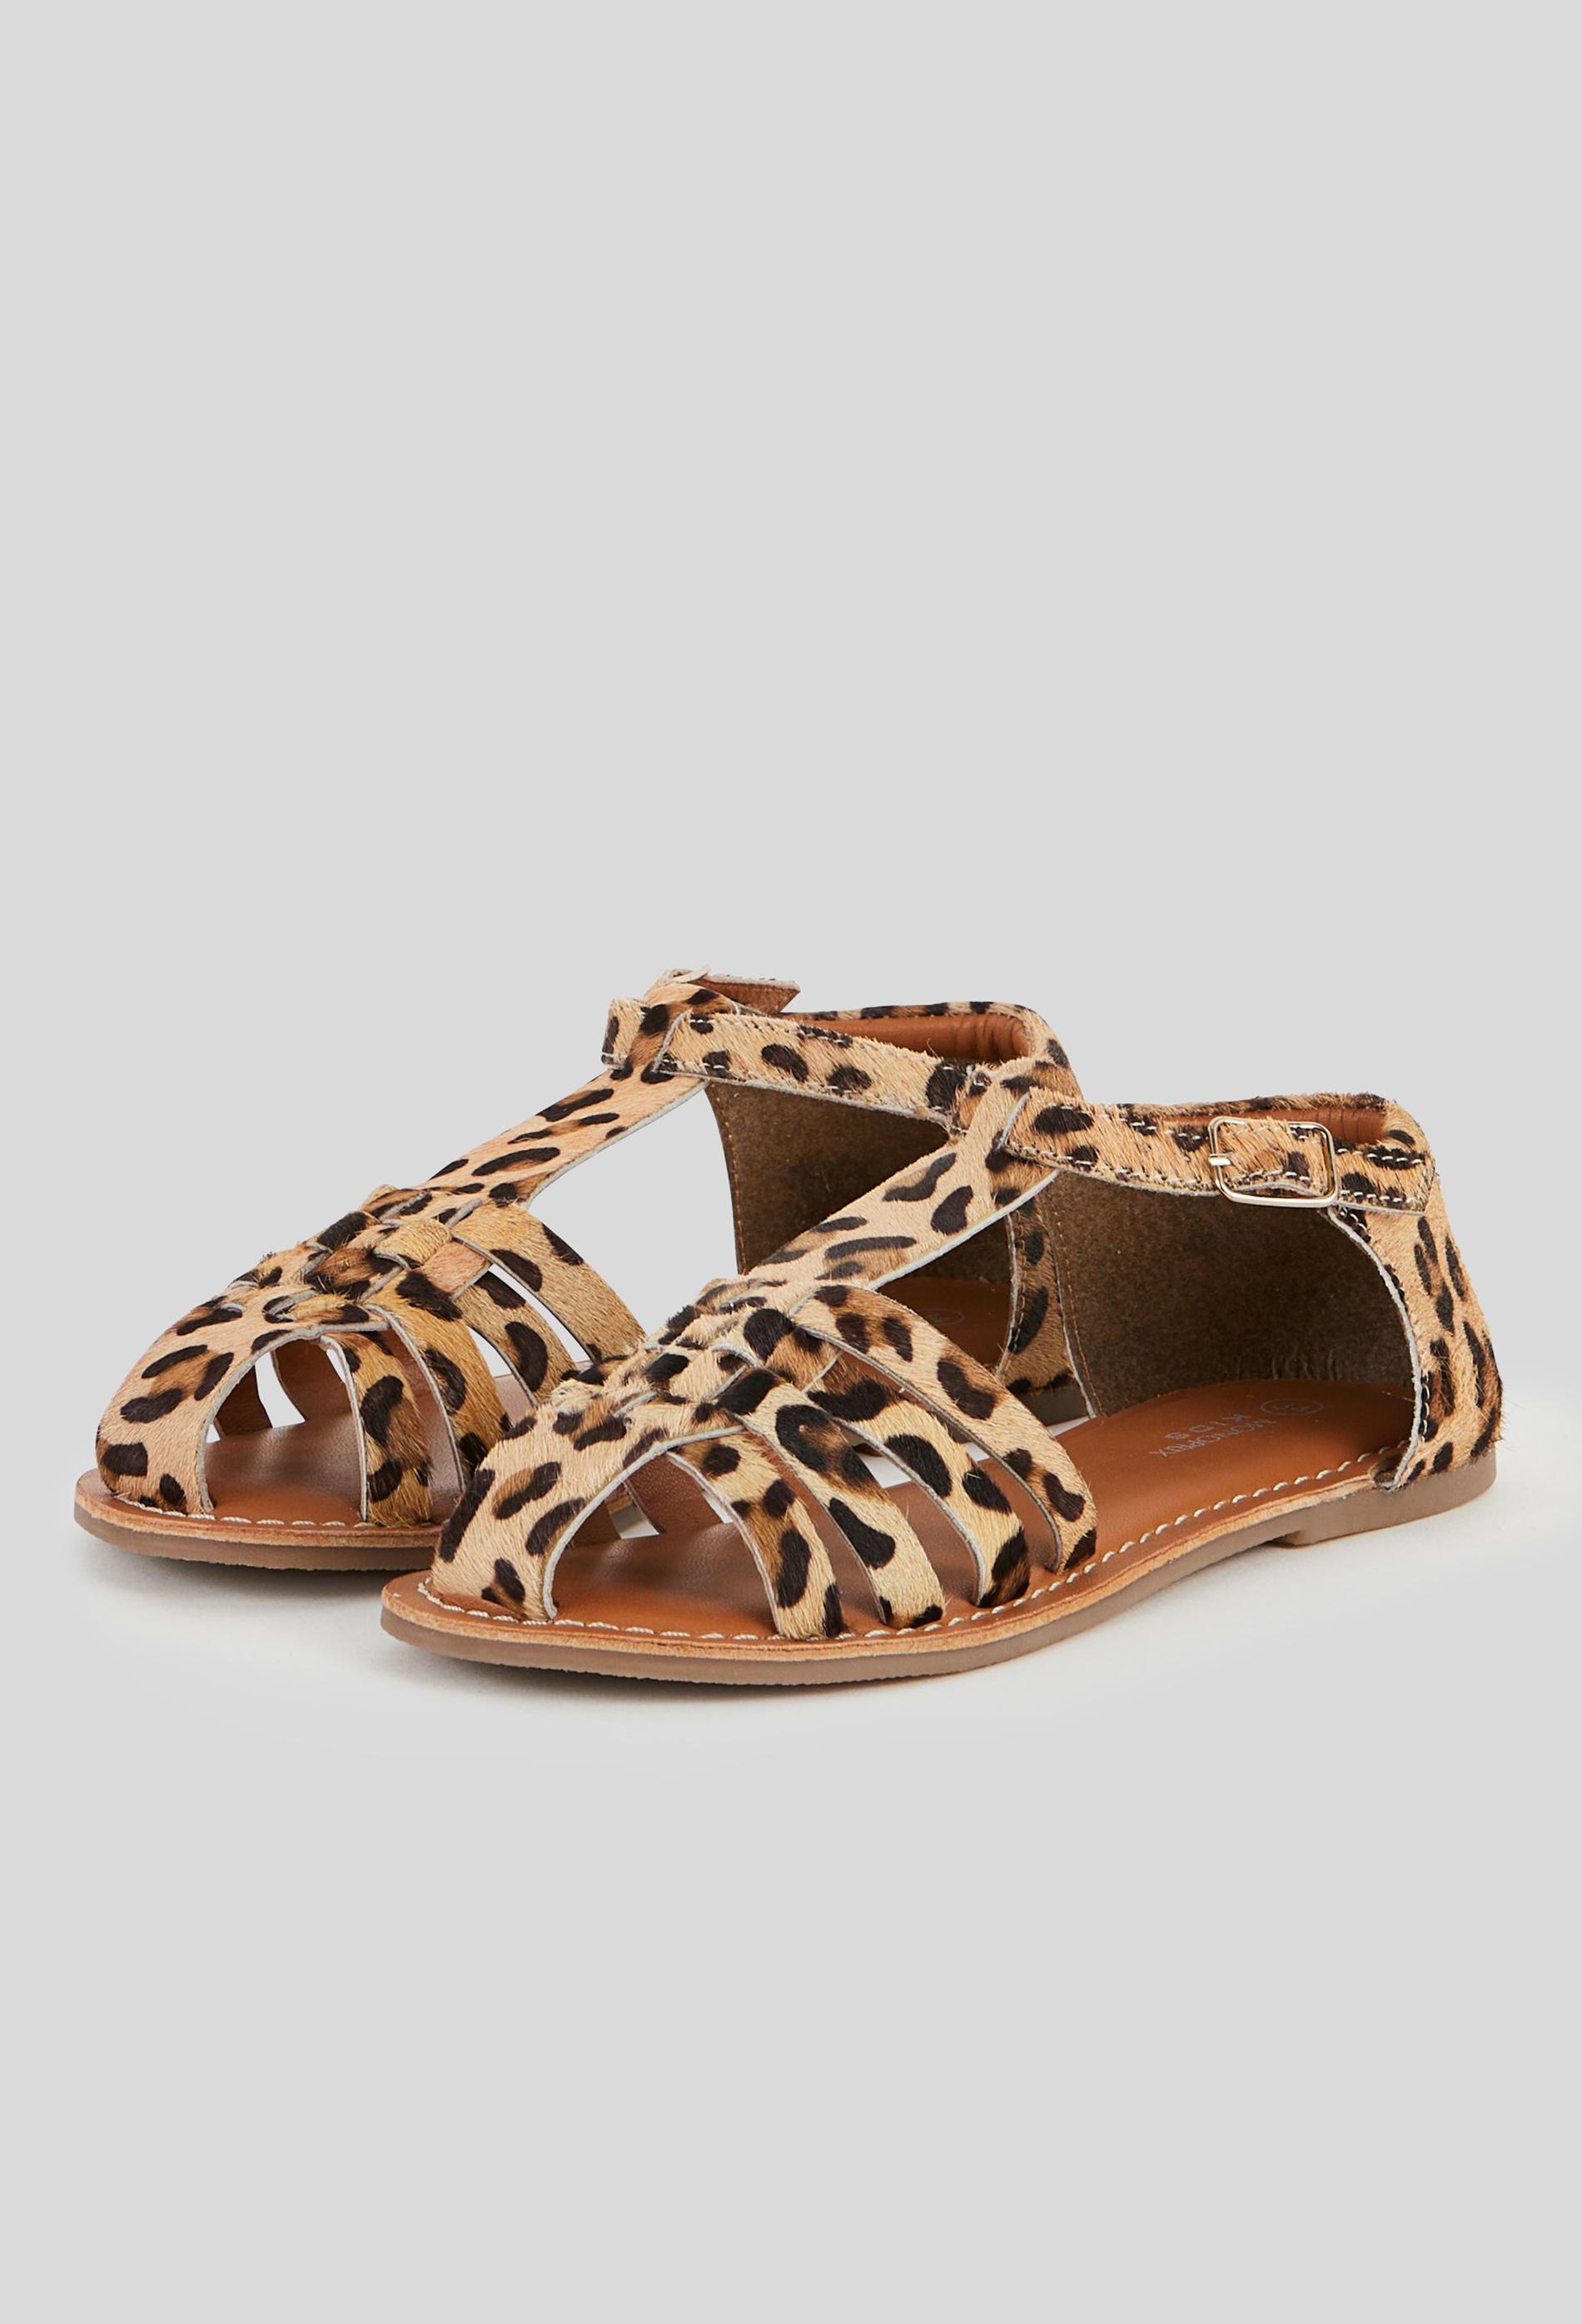 Sandales léopard 34 brun clair